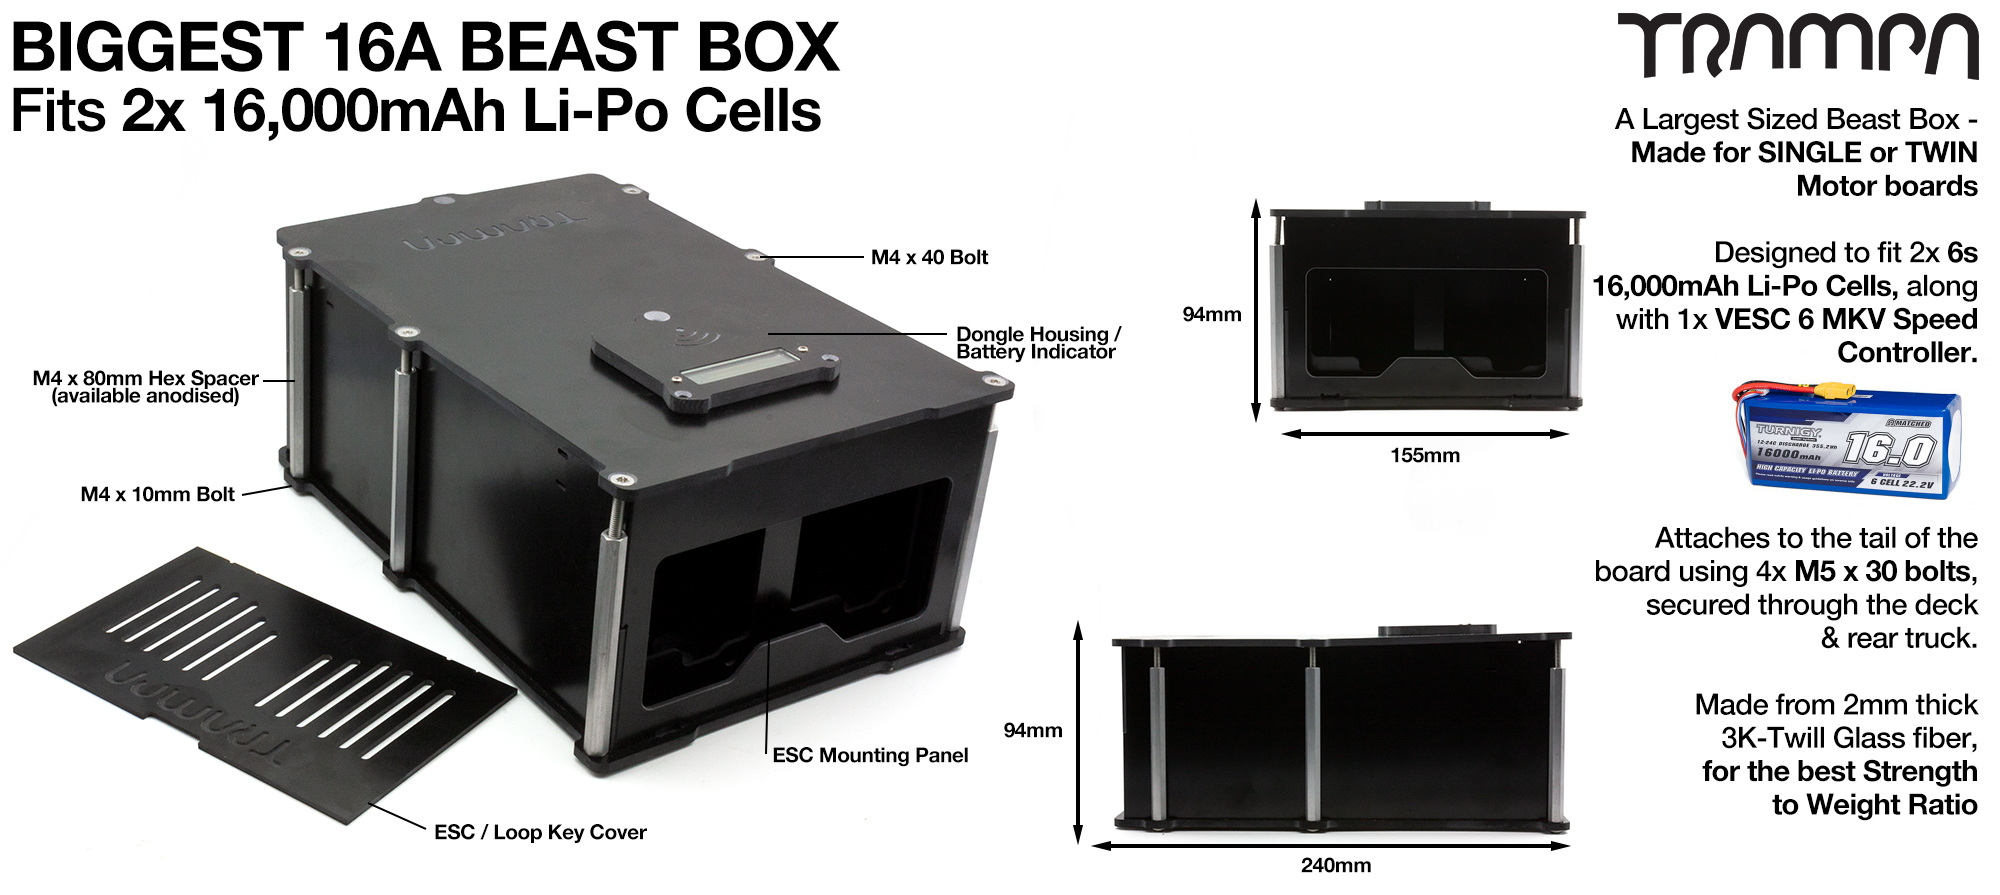 16A BIGGEST BEAST Box fits 2x 6s 16A cells with Internal VESC Housing fitting 1x VESC 6